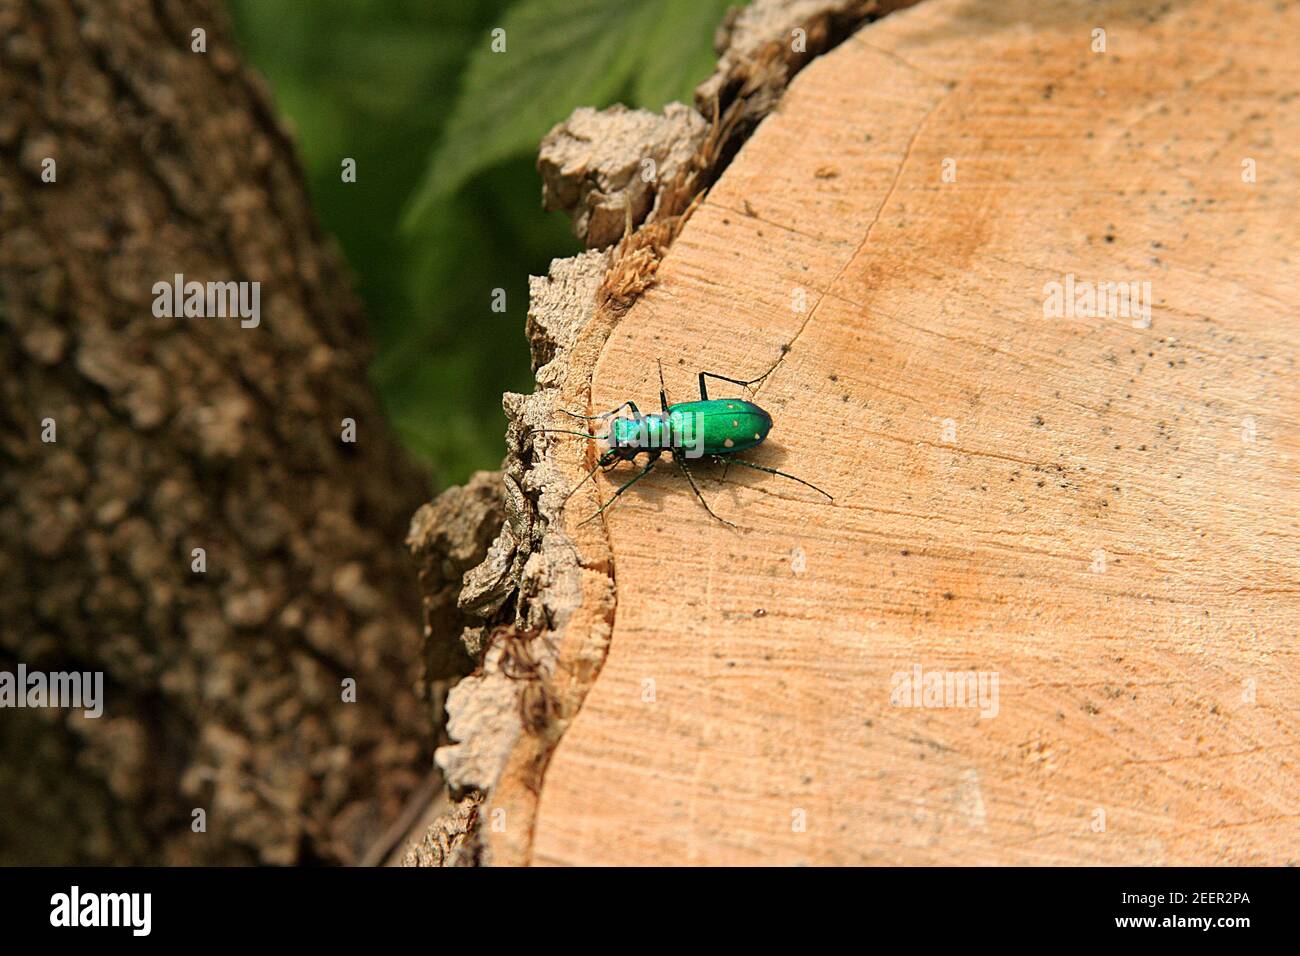 A Six-spotted Tiger Beetle (Cicindela sexguttata) Stock Photo